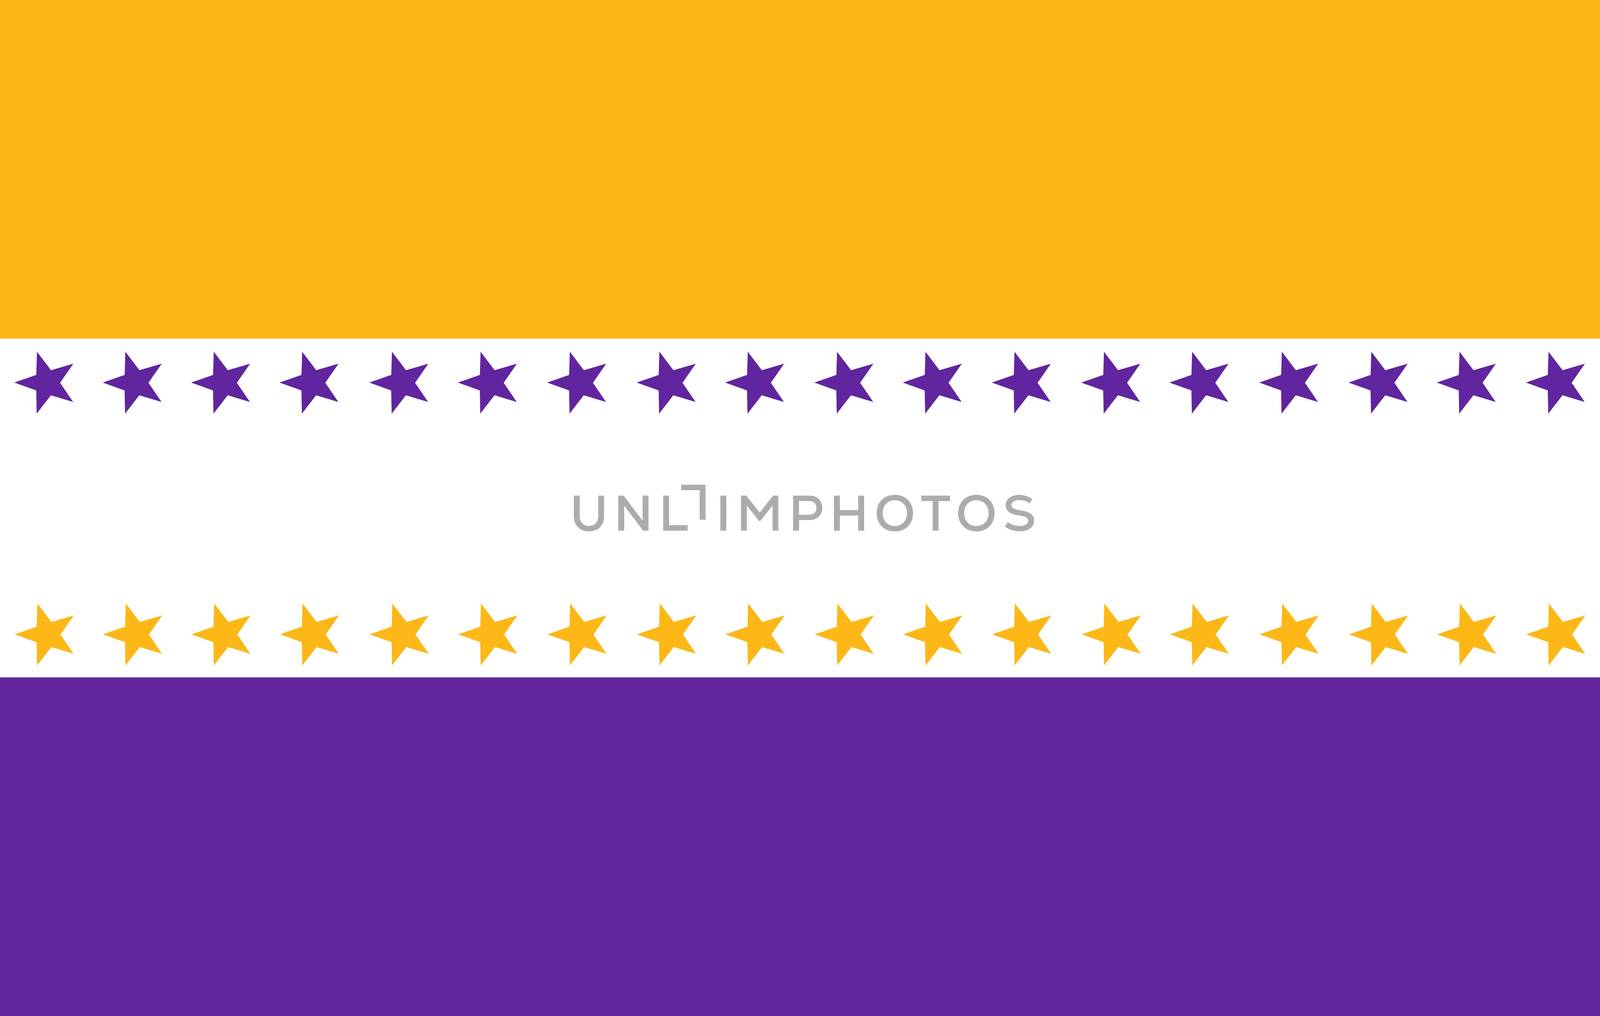 Nineteenth Amendment flag united states of america history symbol